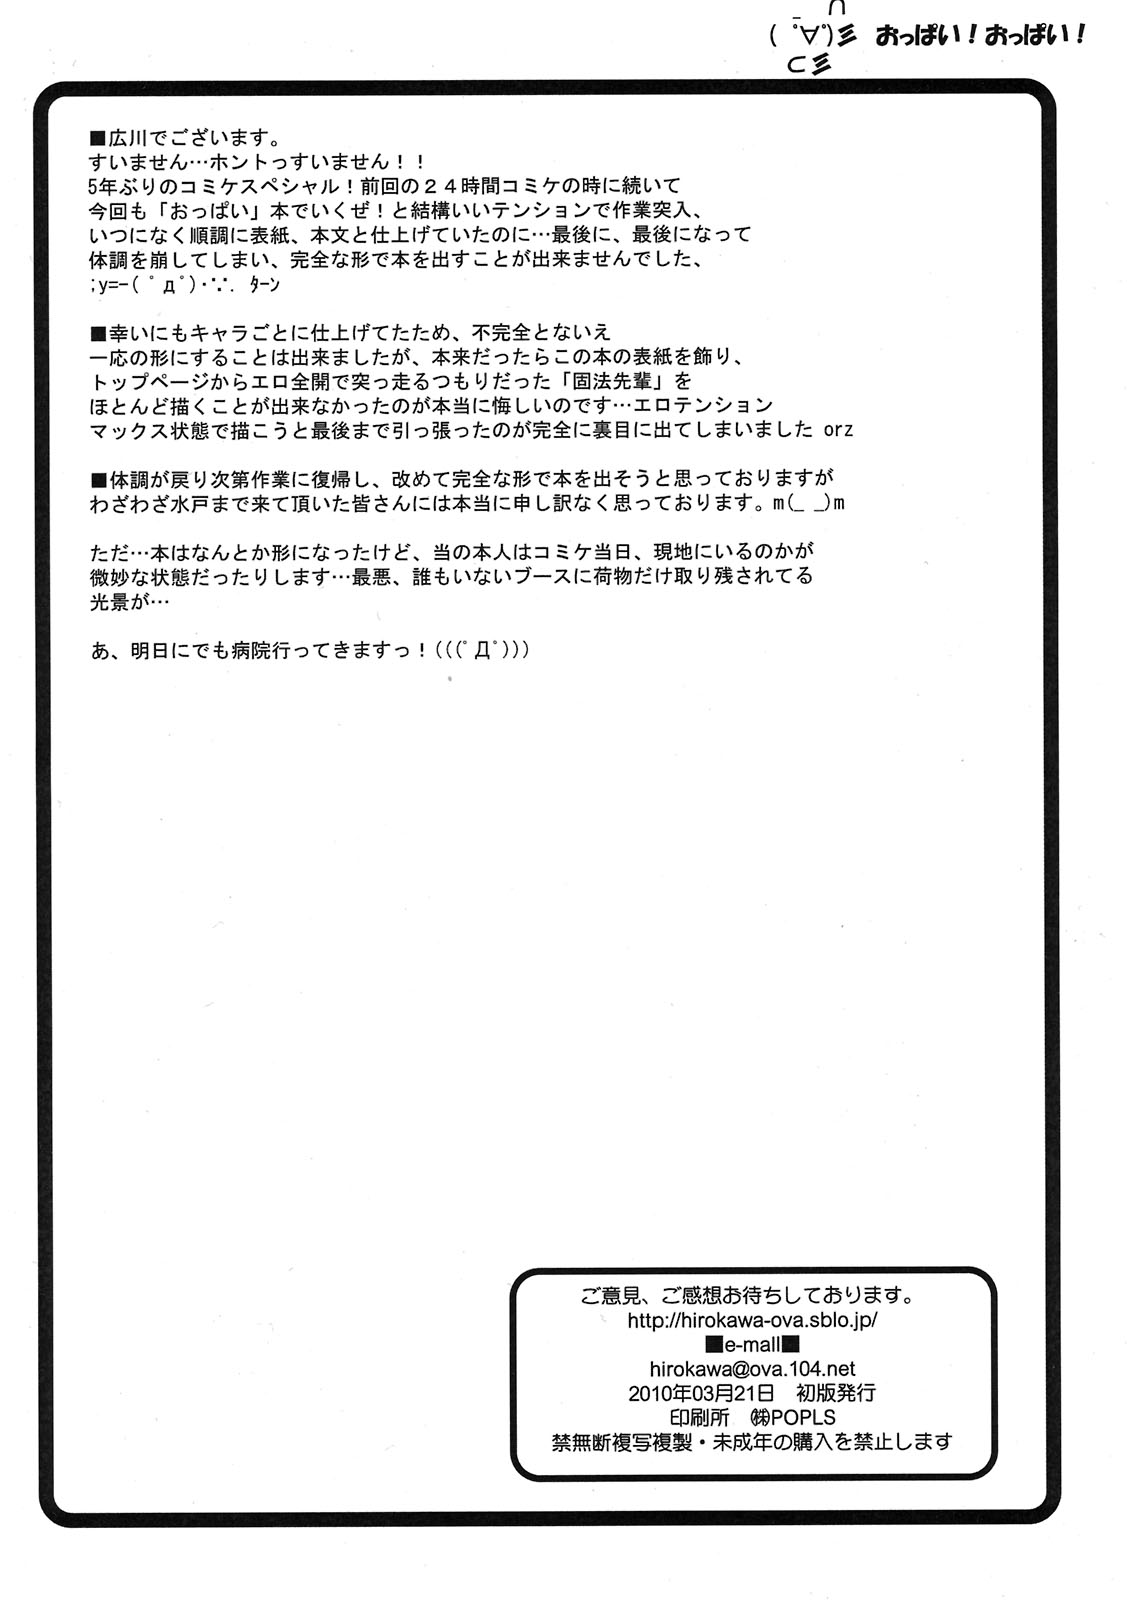 (CSP5) [OVACAS (広川浩一郎)] 春まつり乳まつり2010 EVENT EDITION (よろず)